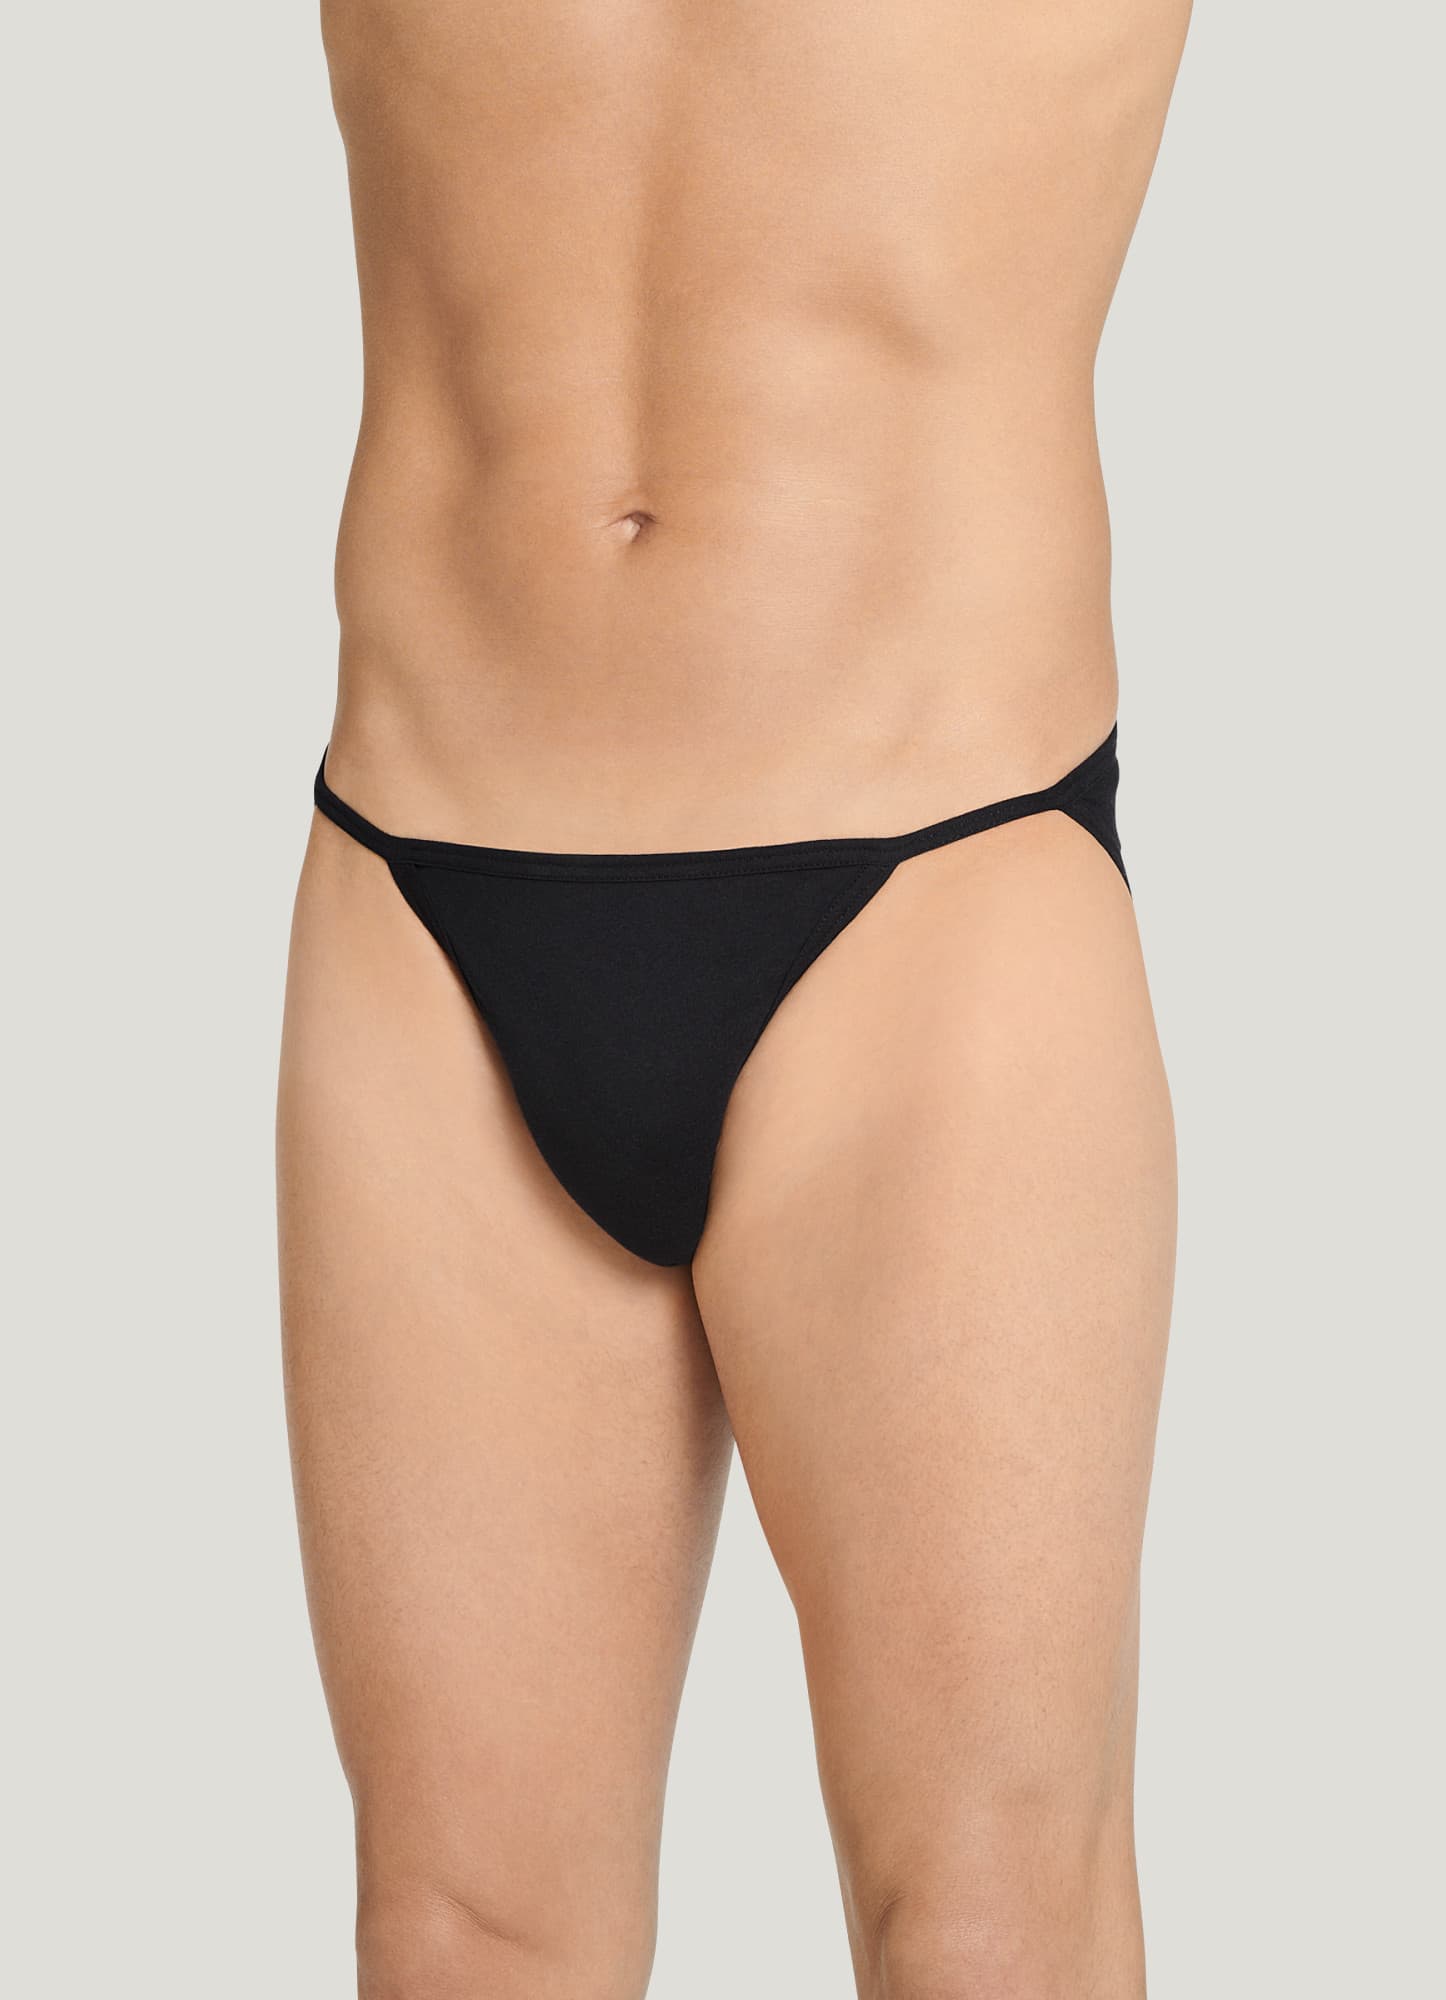 Jockey Elance String Bikini Underwear size 6